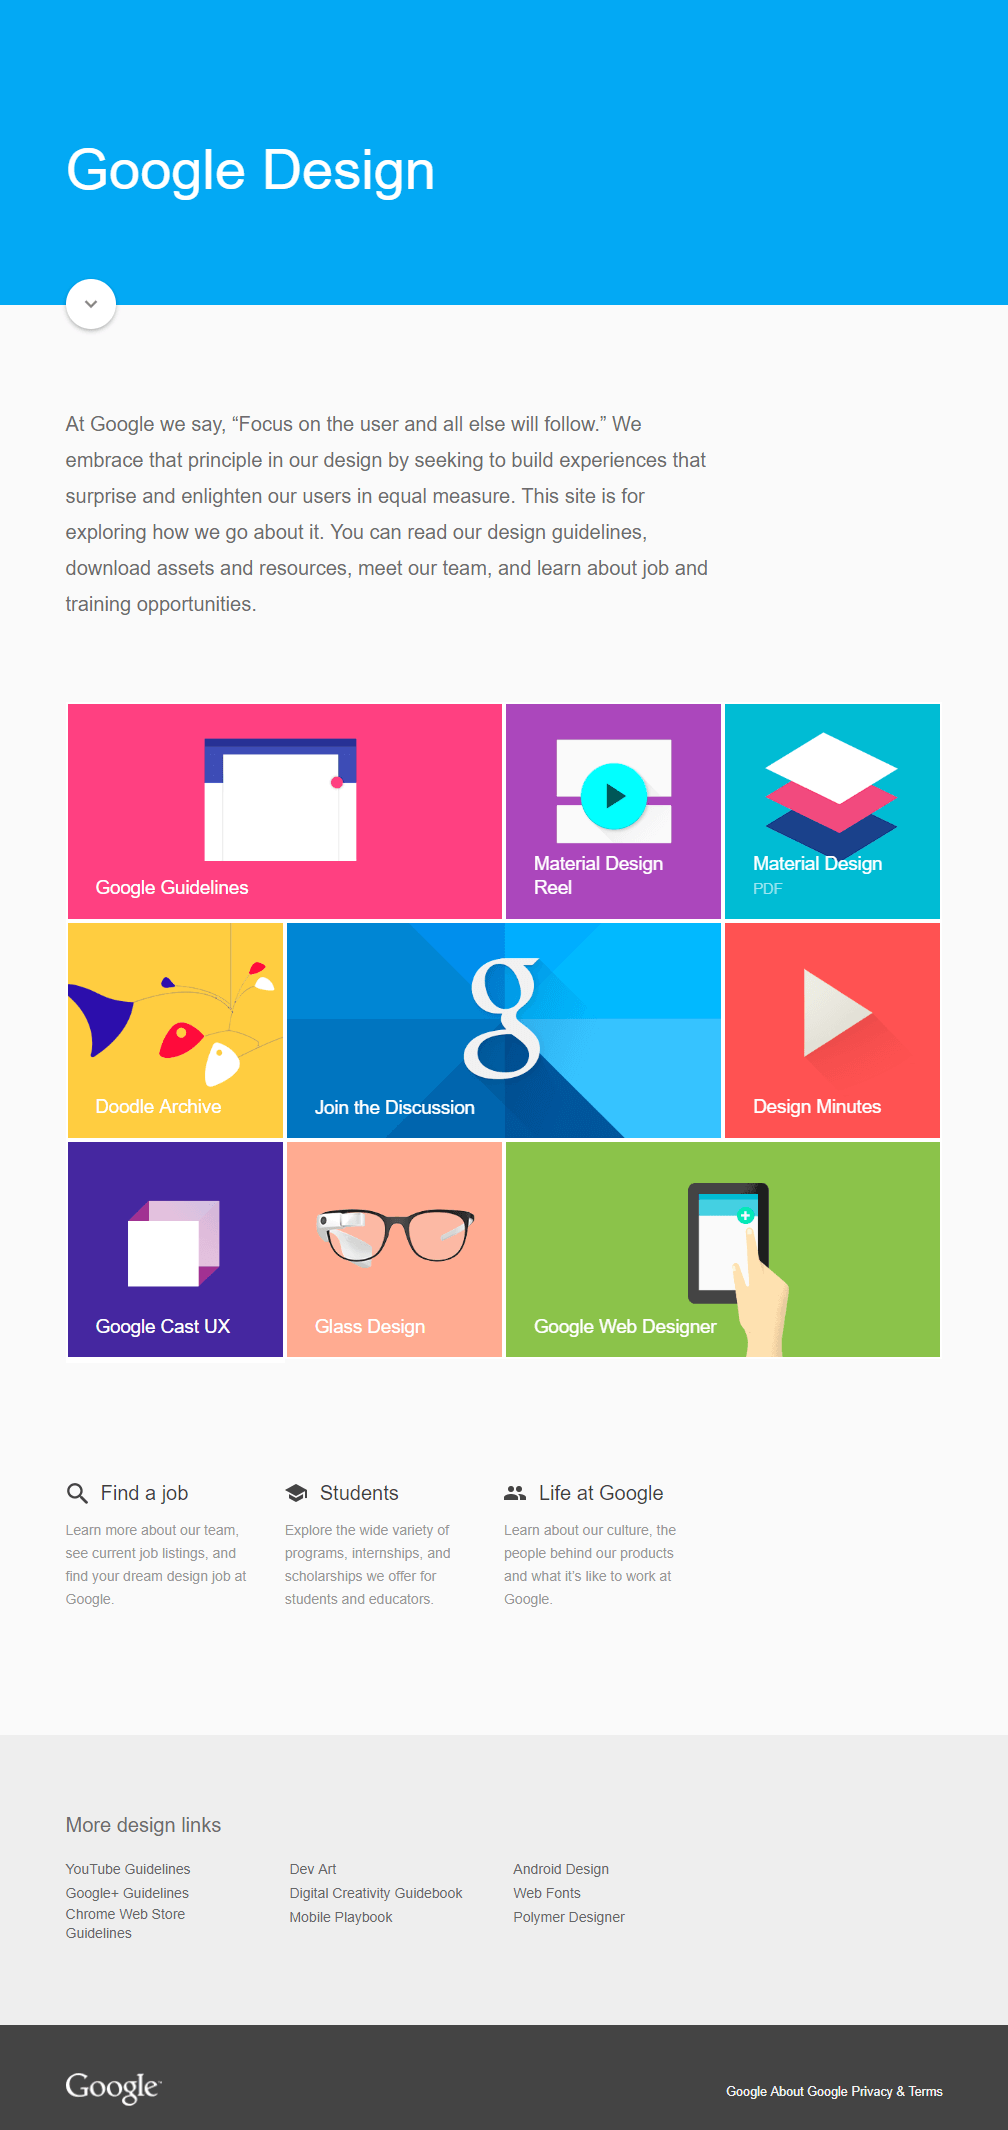 Google Material Design website in 2014